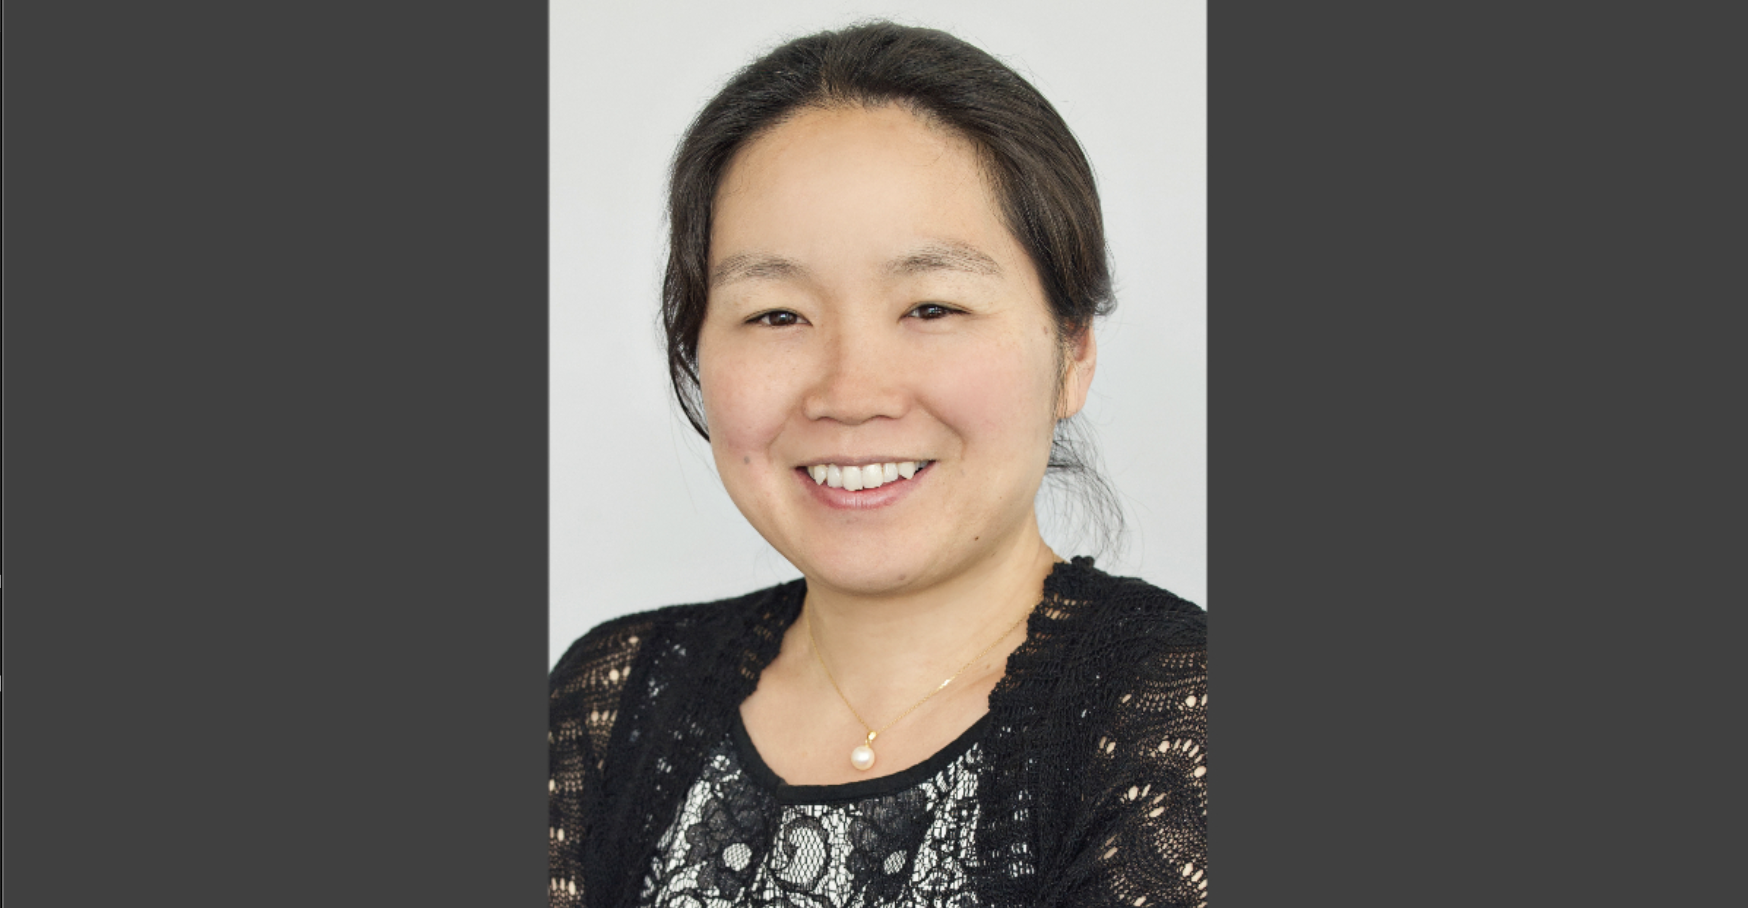 Stem cell researcher Yukiko Yamashita joins MIT Biology